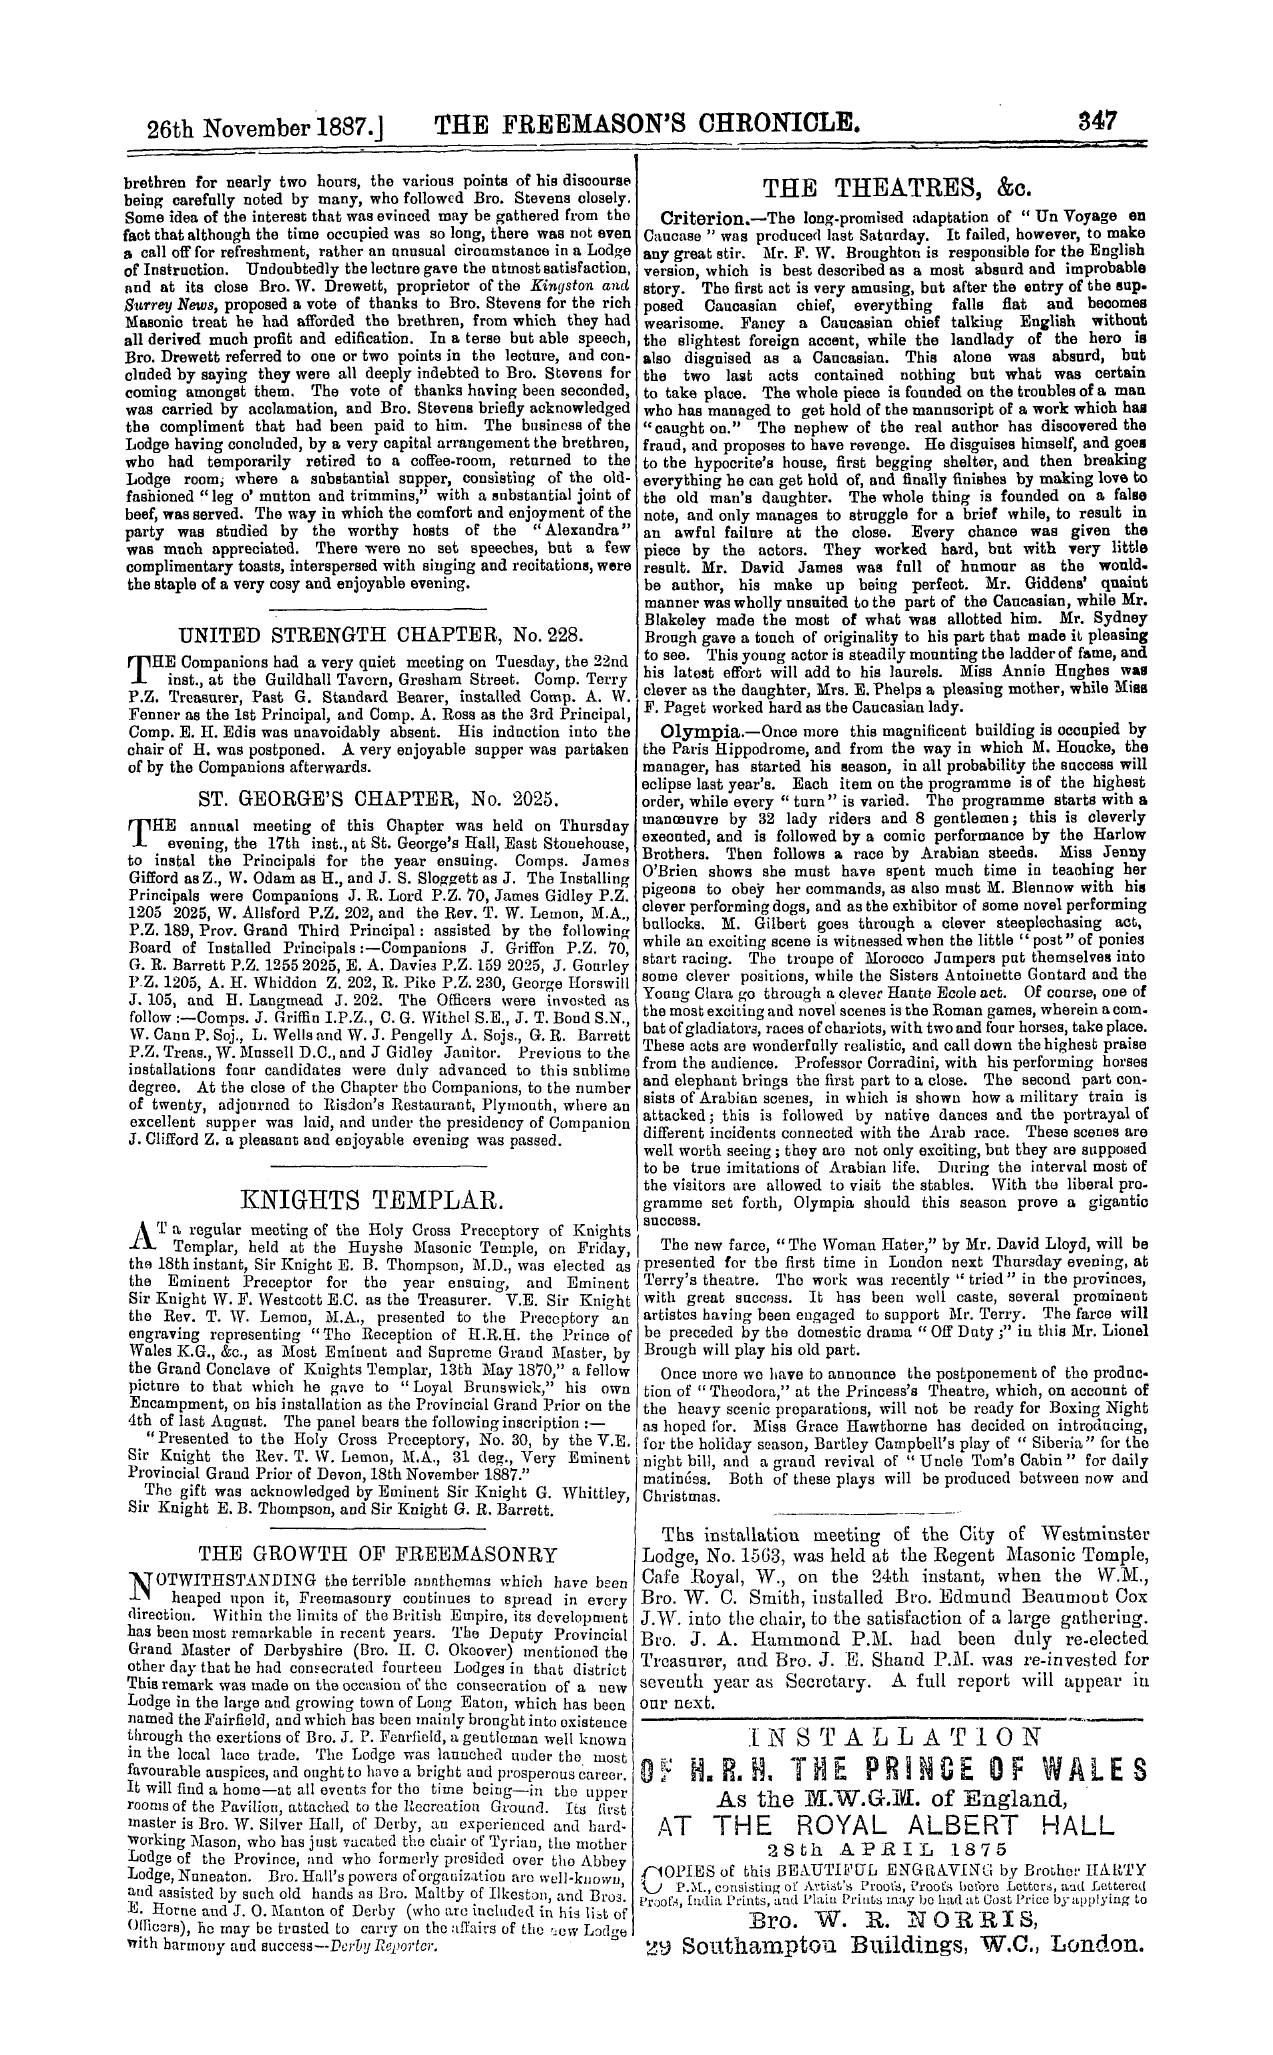 The Freemason's Chronicle: 1887-11-26 - The Theatres, &C.